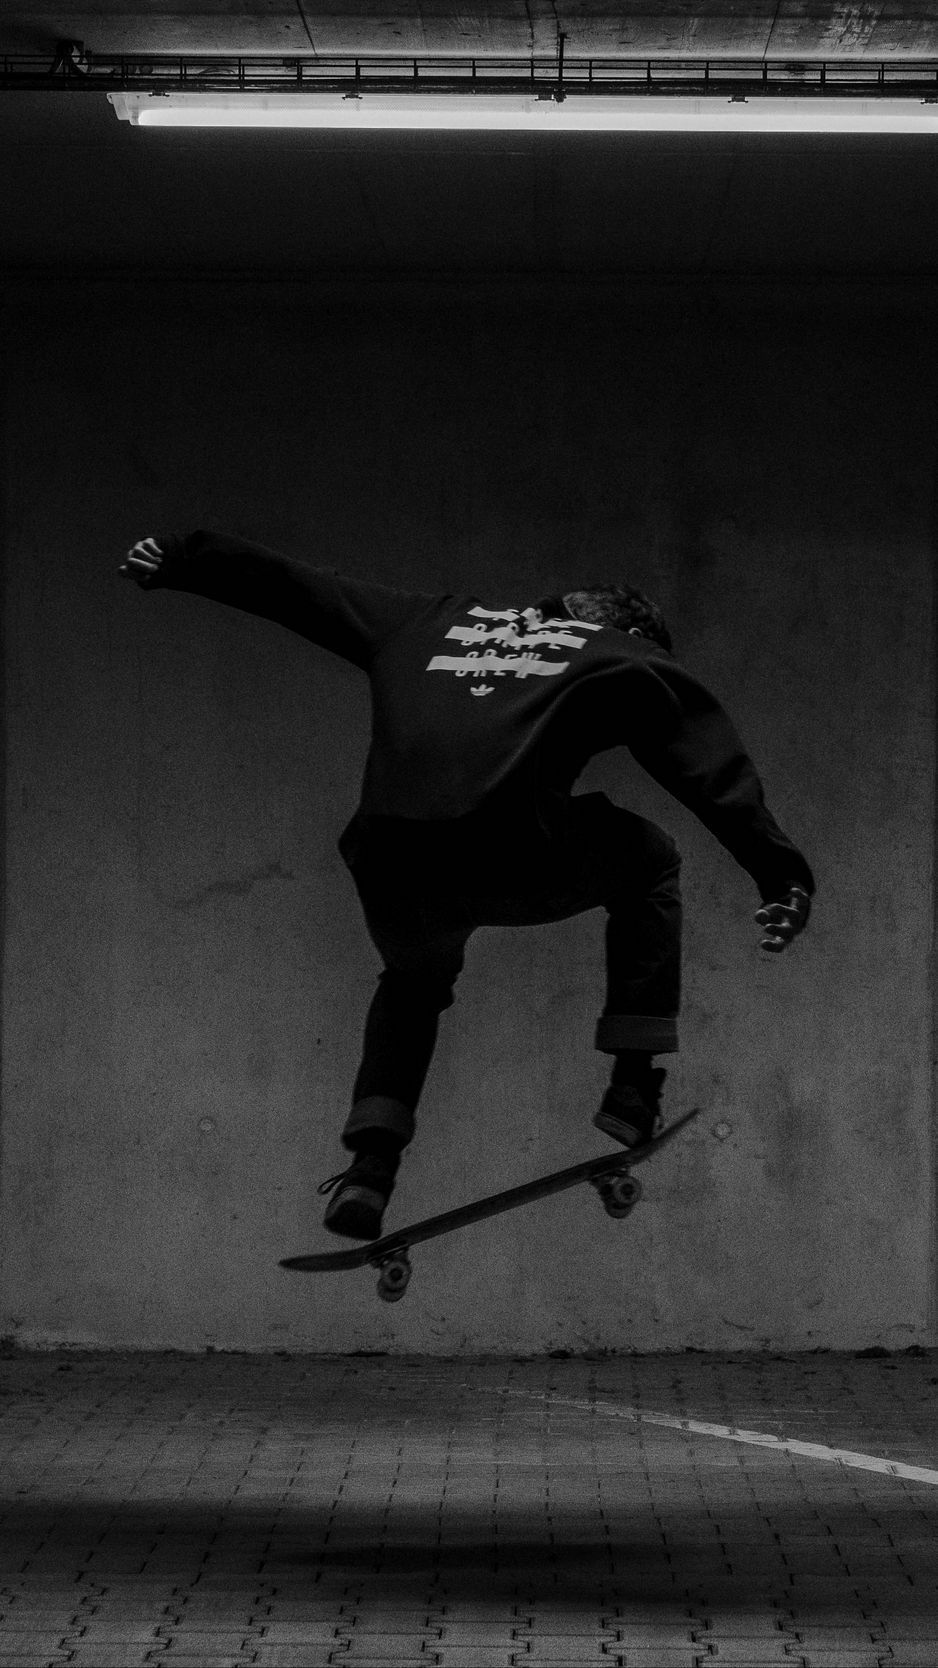 A man on skateboard jumping in the air - Skate, skater